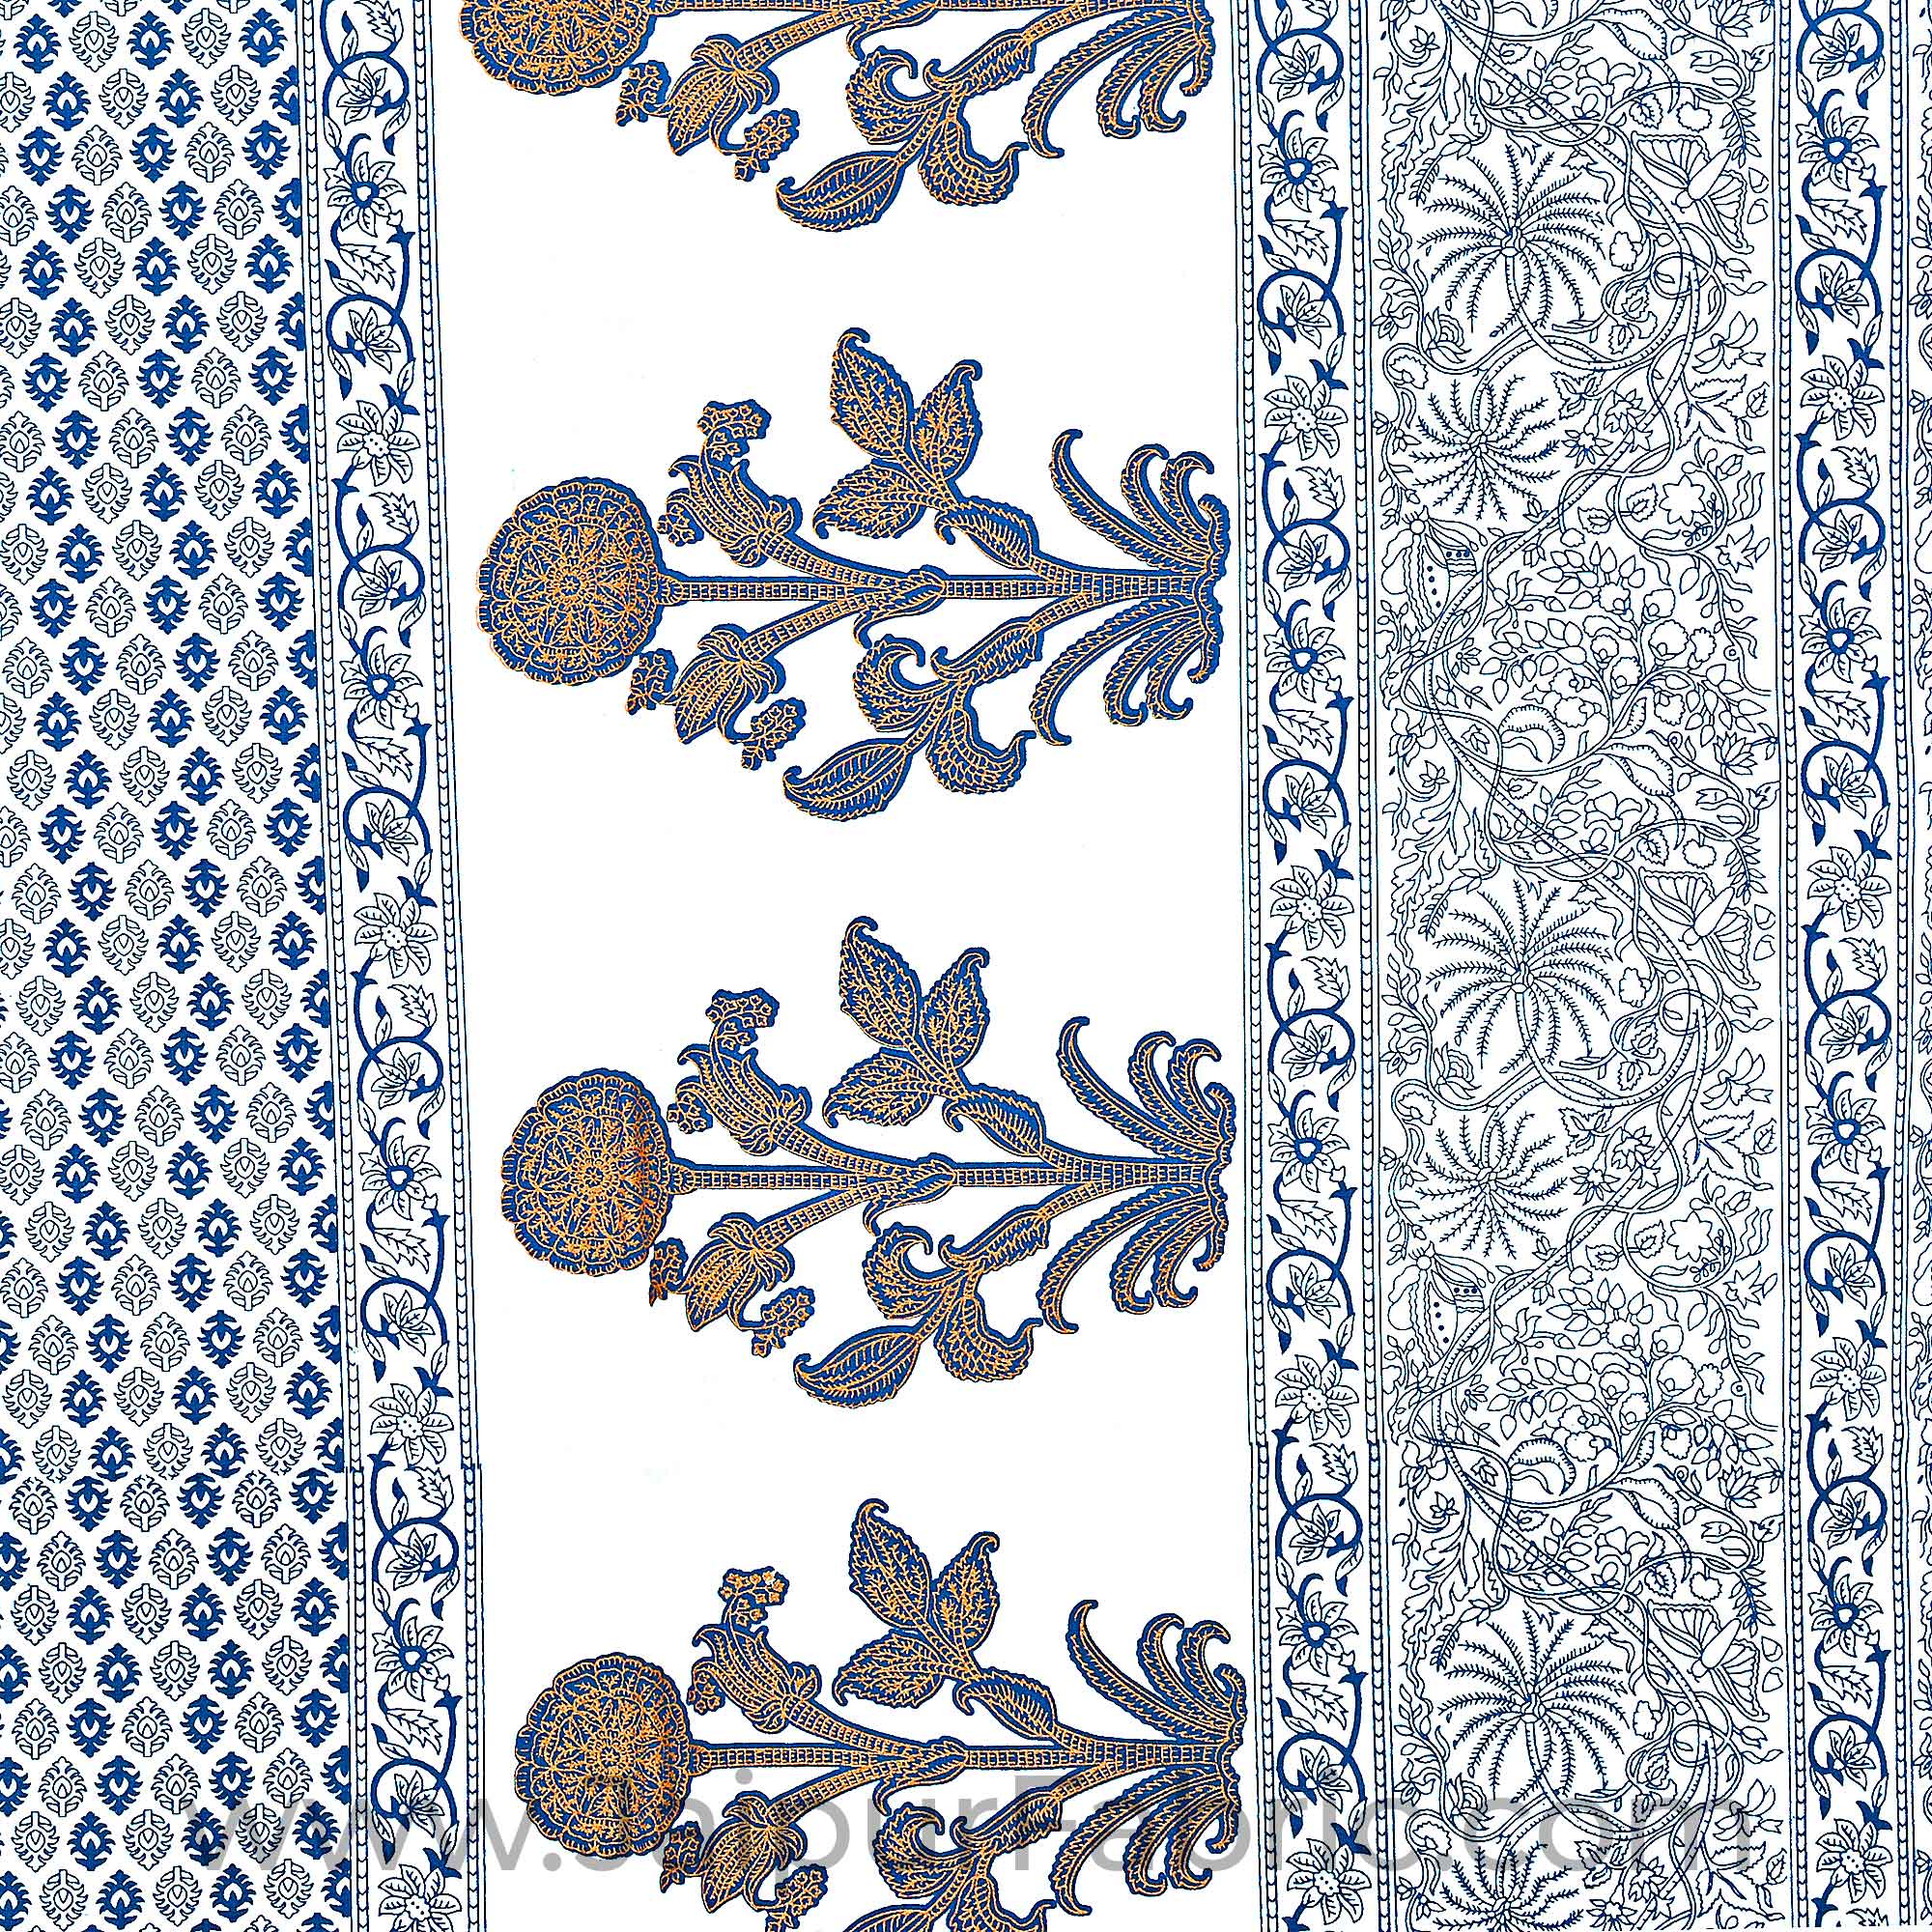 Navy Blue Border Floral Print Cotoon Satin King Size Double  Bedsheet